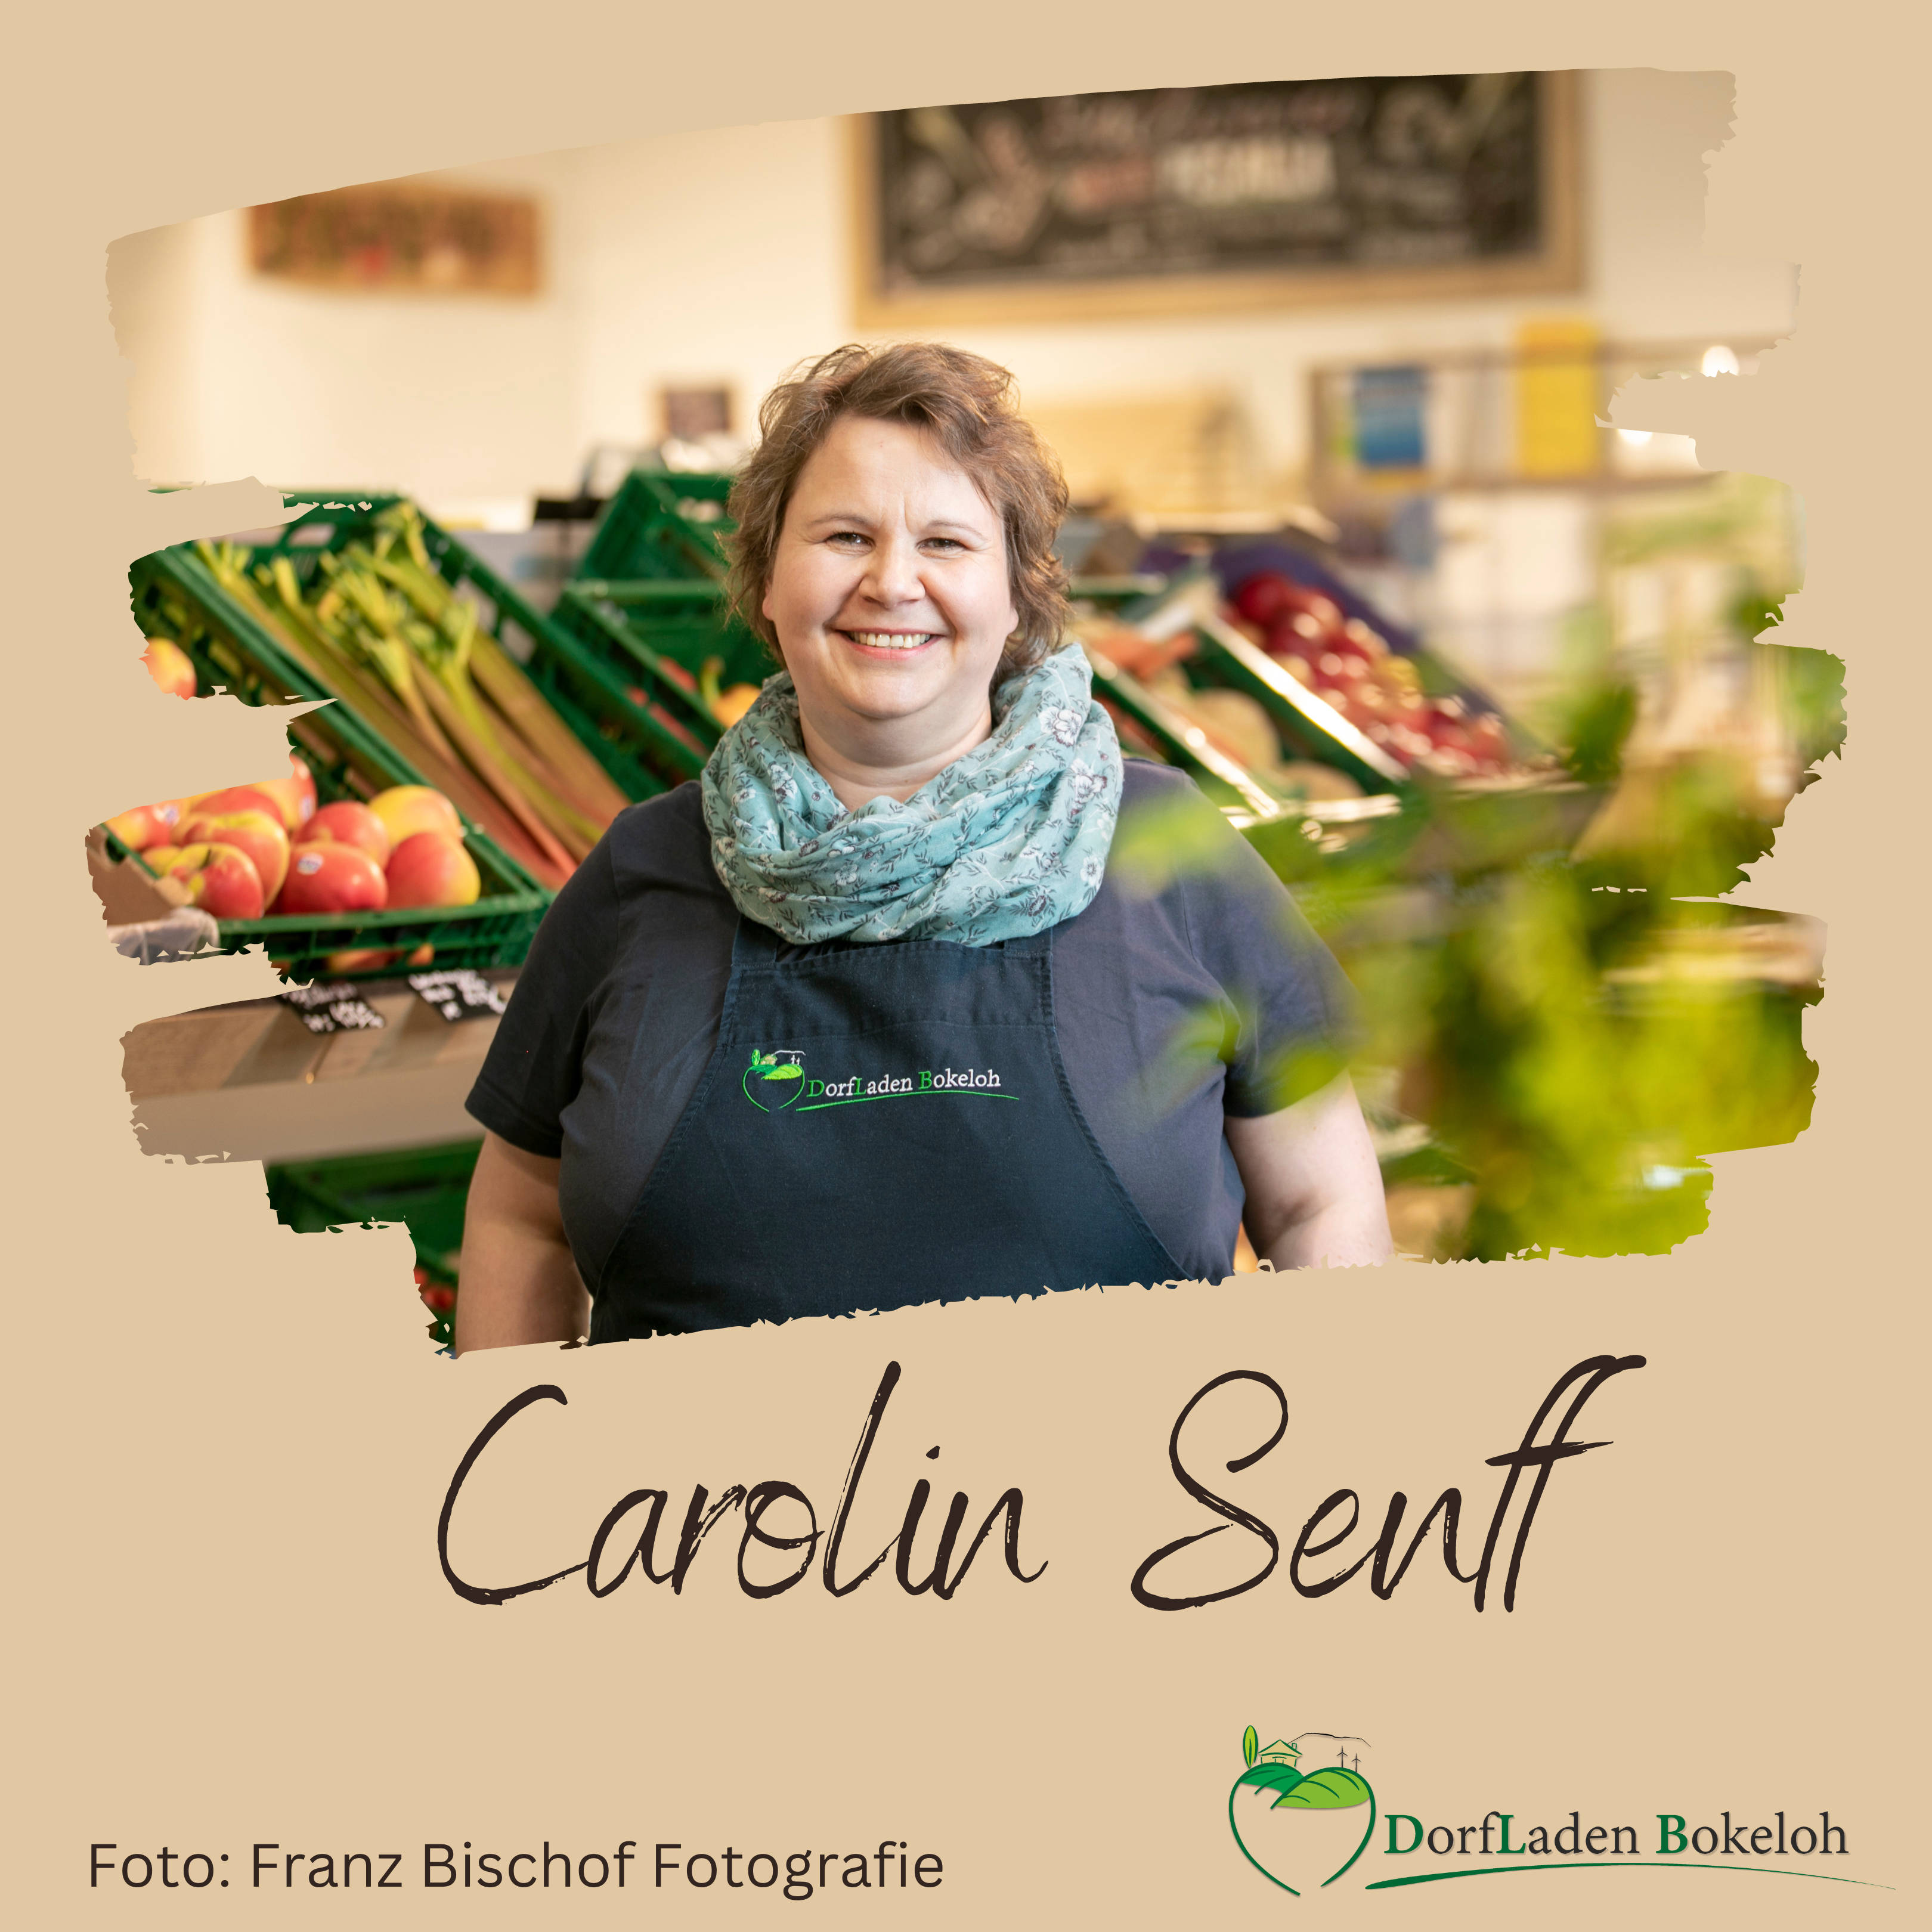 Carolin Senff